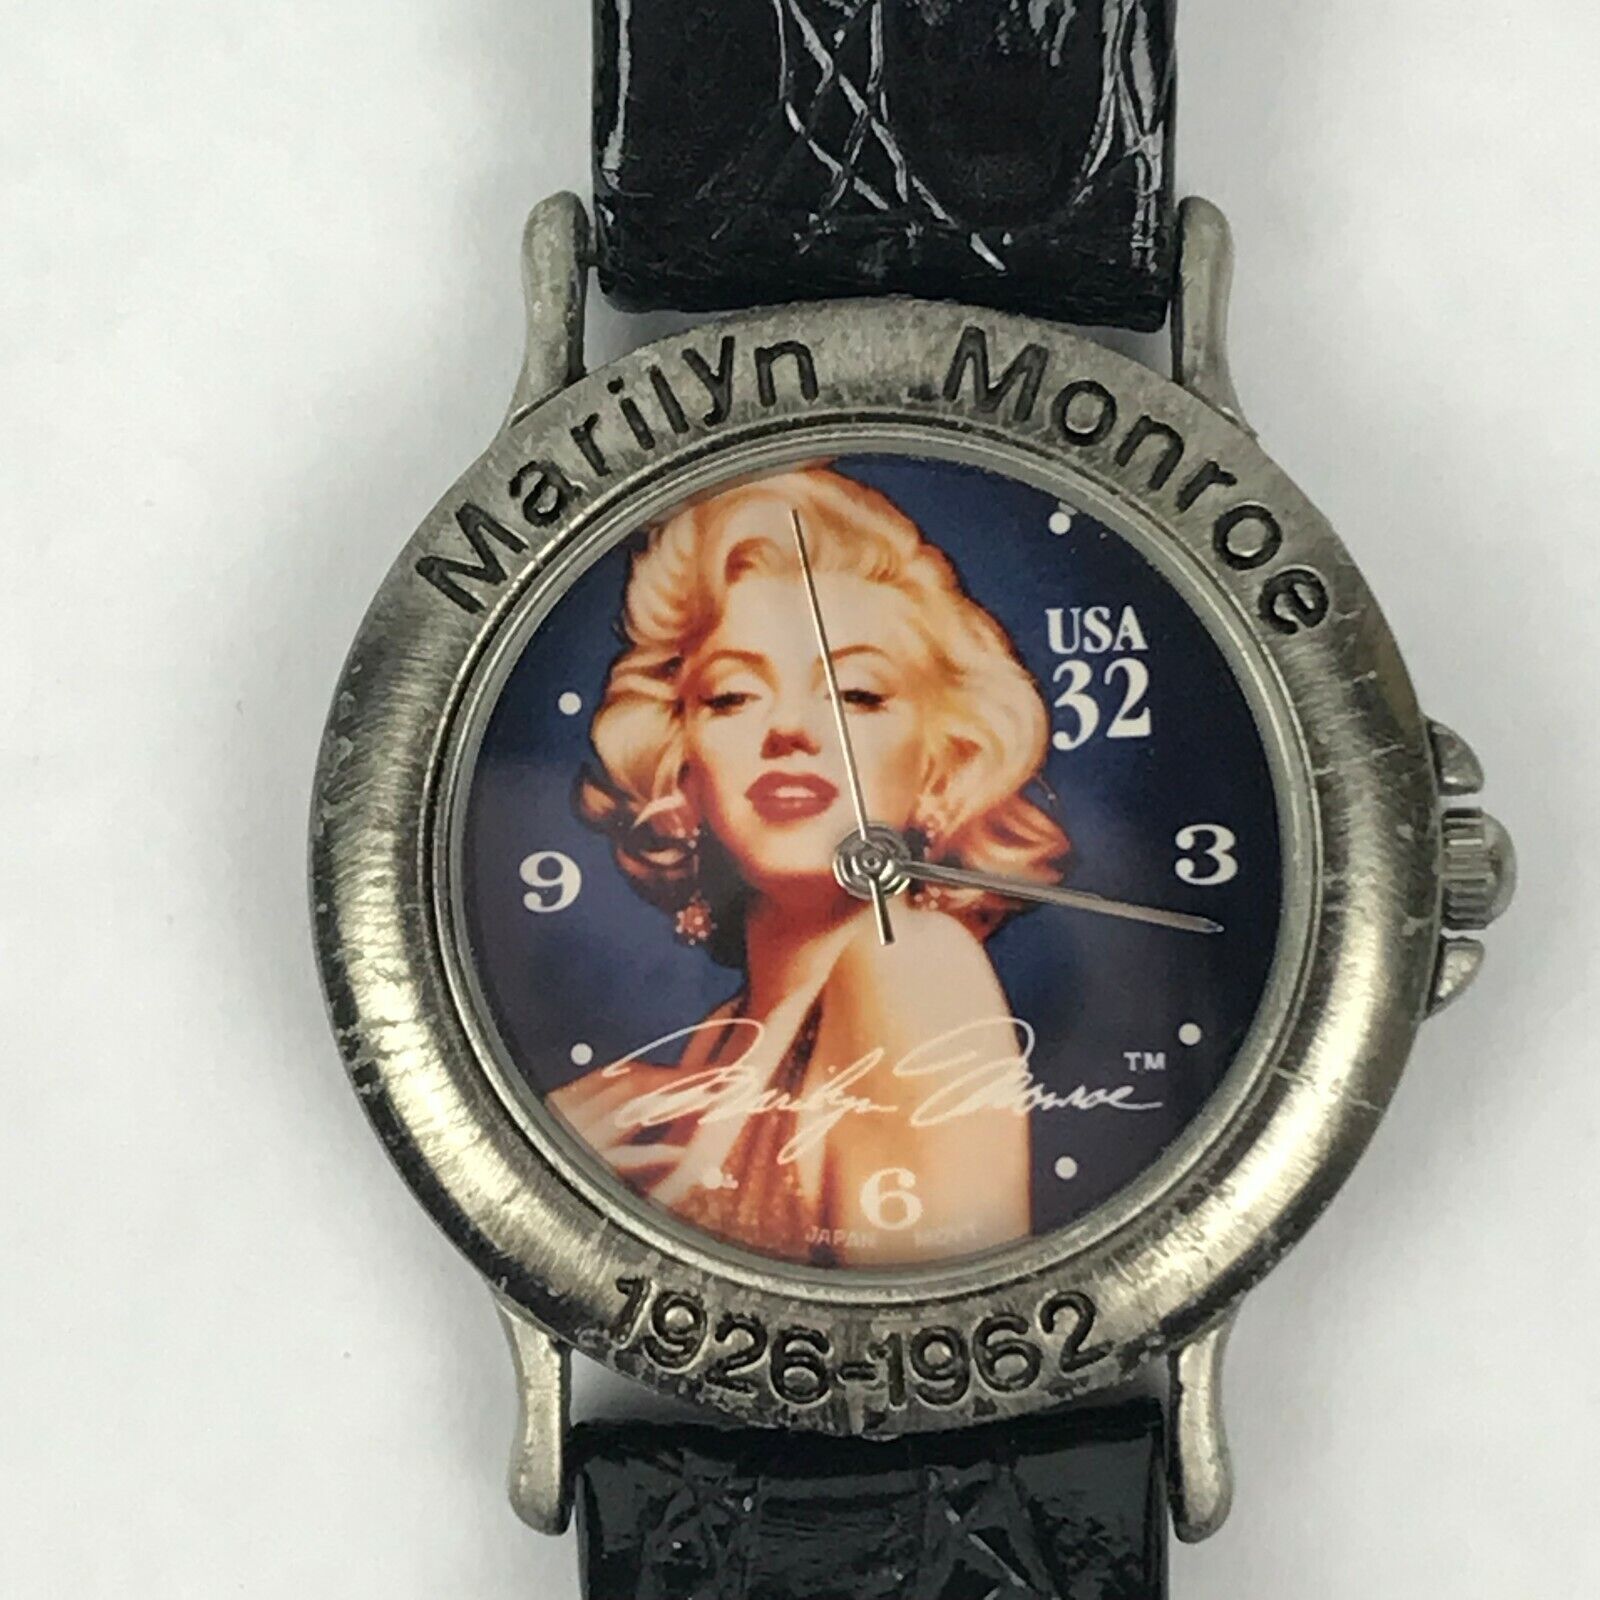 Marilyn Monroe The Estate of Marilyn Monroe Design 1995 USPS Watch Collector VTG